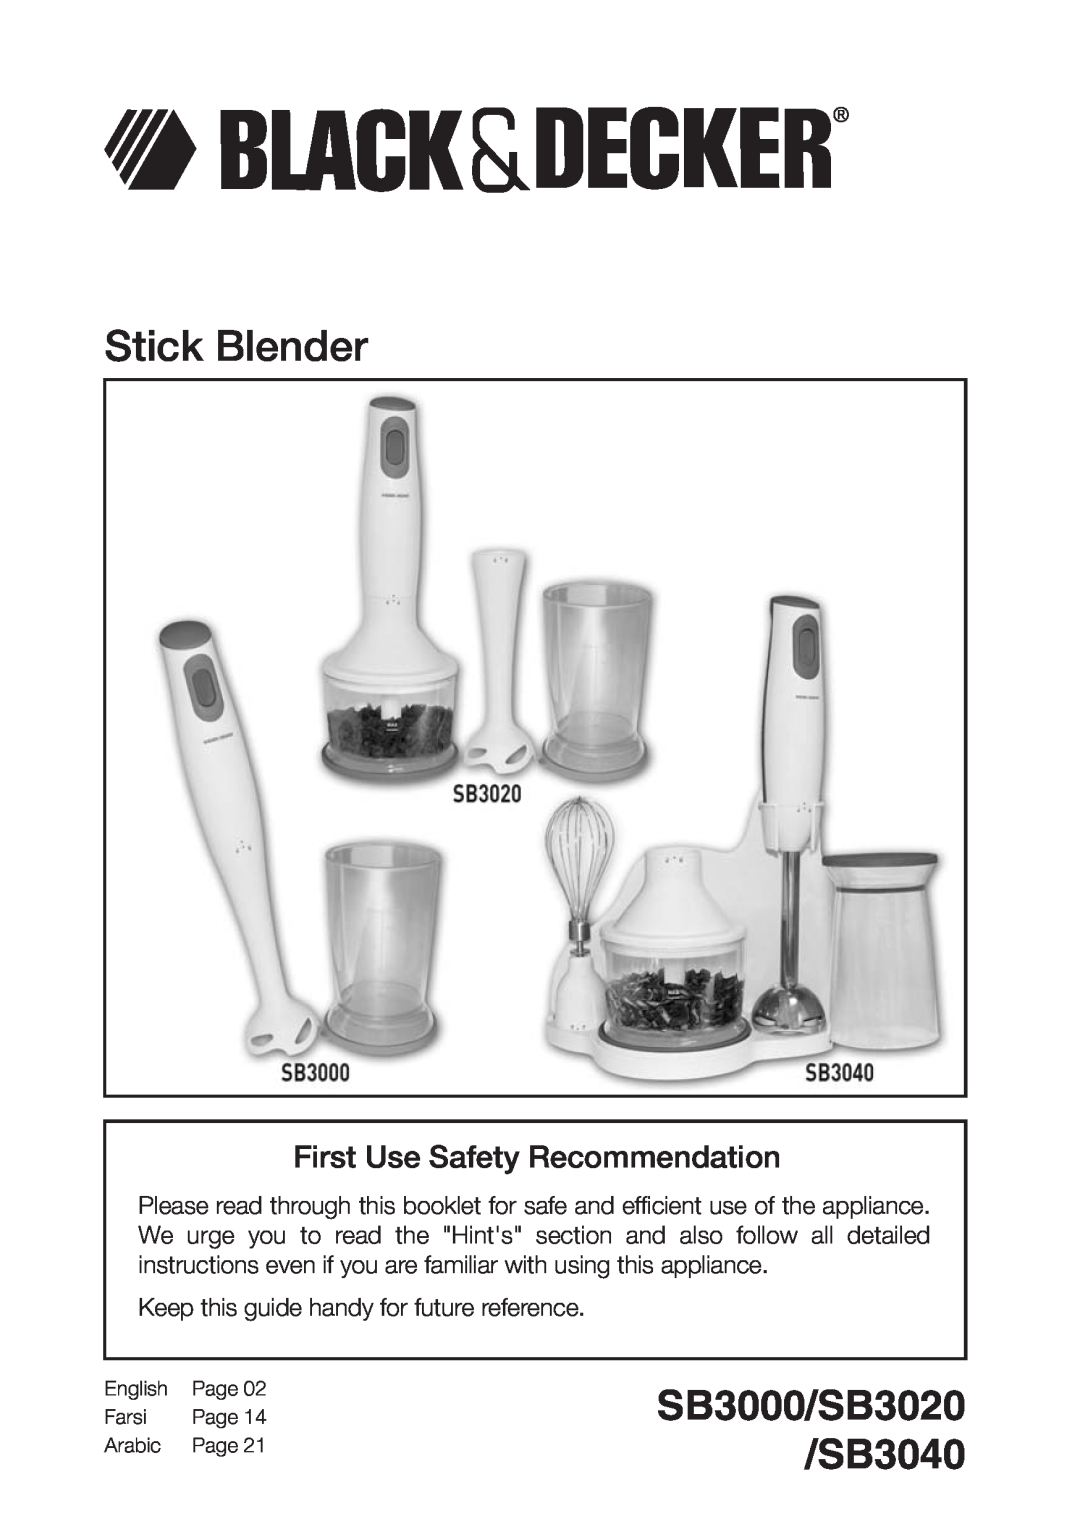 Black & Decker manual Stick Blender, SB3000/SB3020 SB3040, First Use Safety Recommendation 